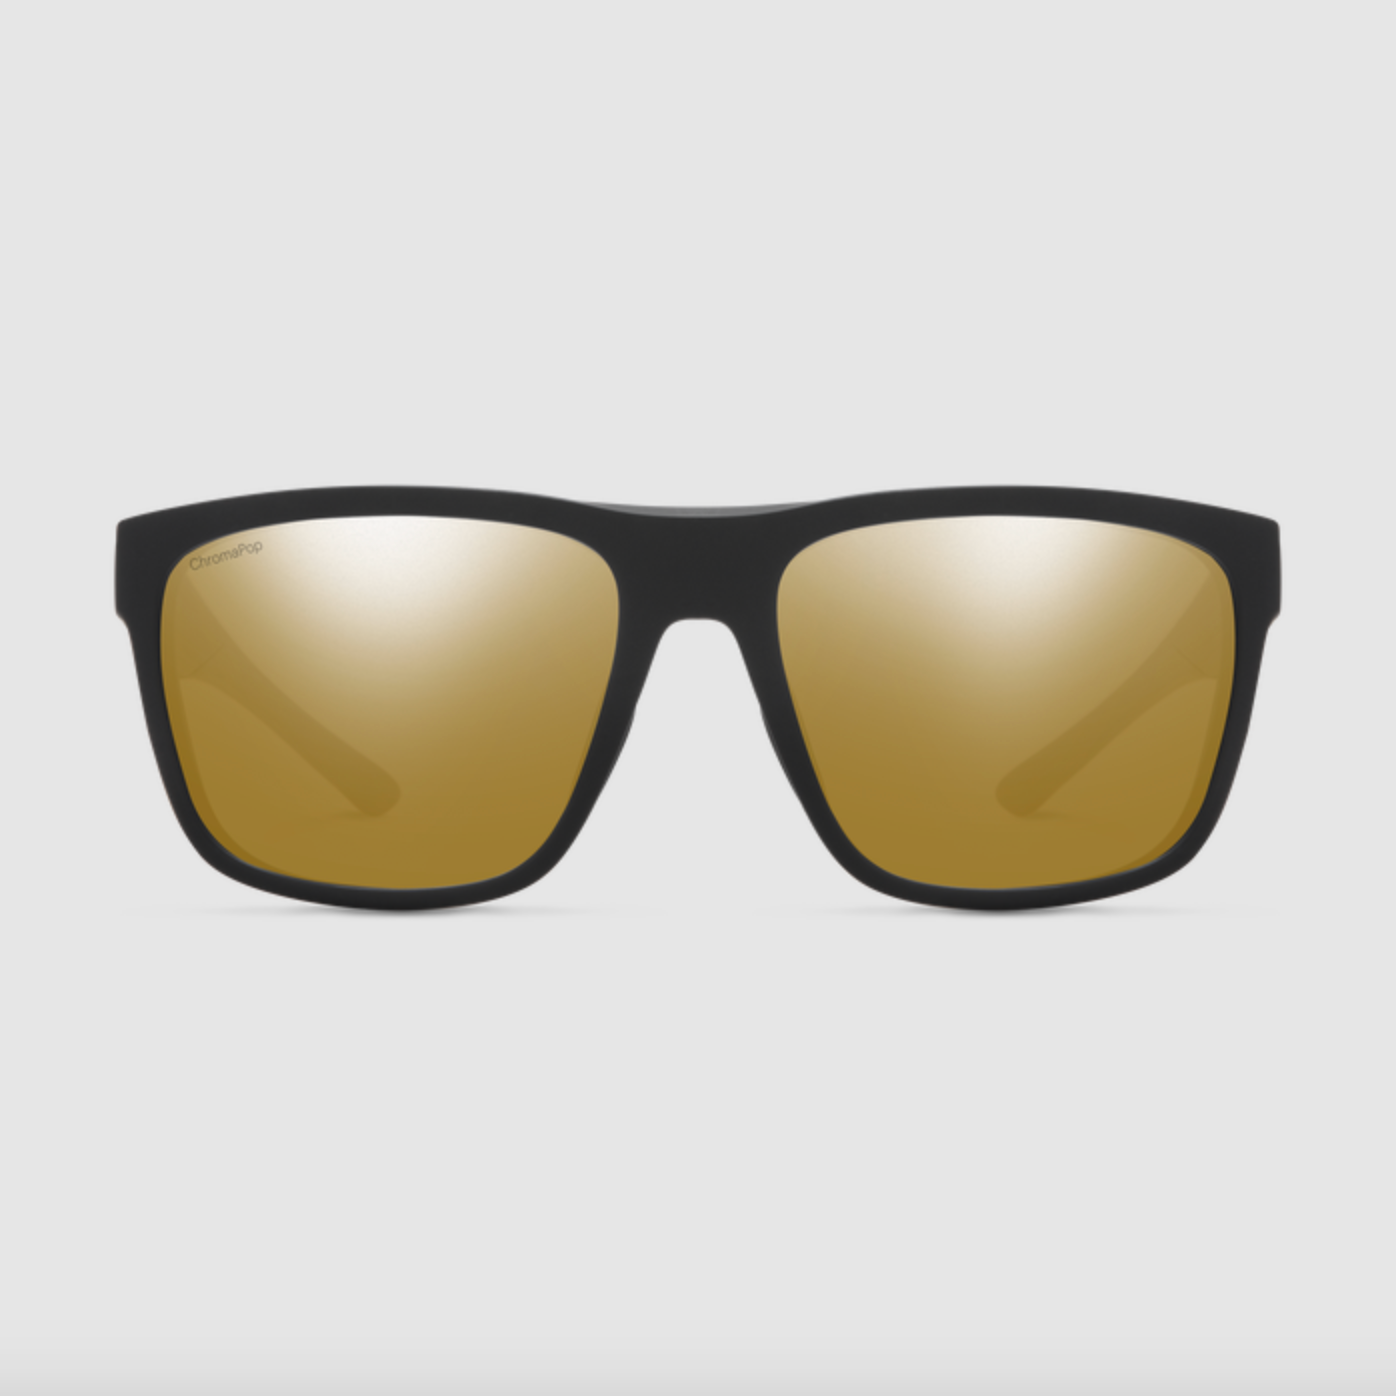 Smith Barra Matte Black ChromaPop Polarized Bronze Mirror Sunglasses